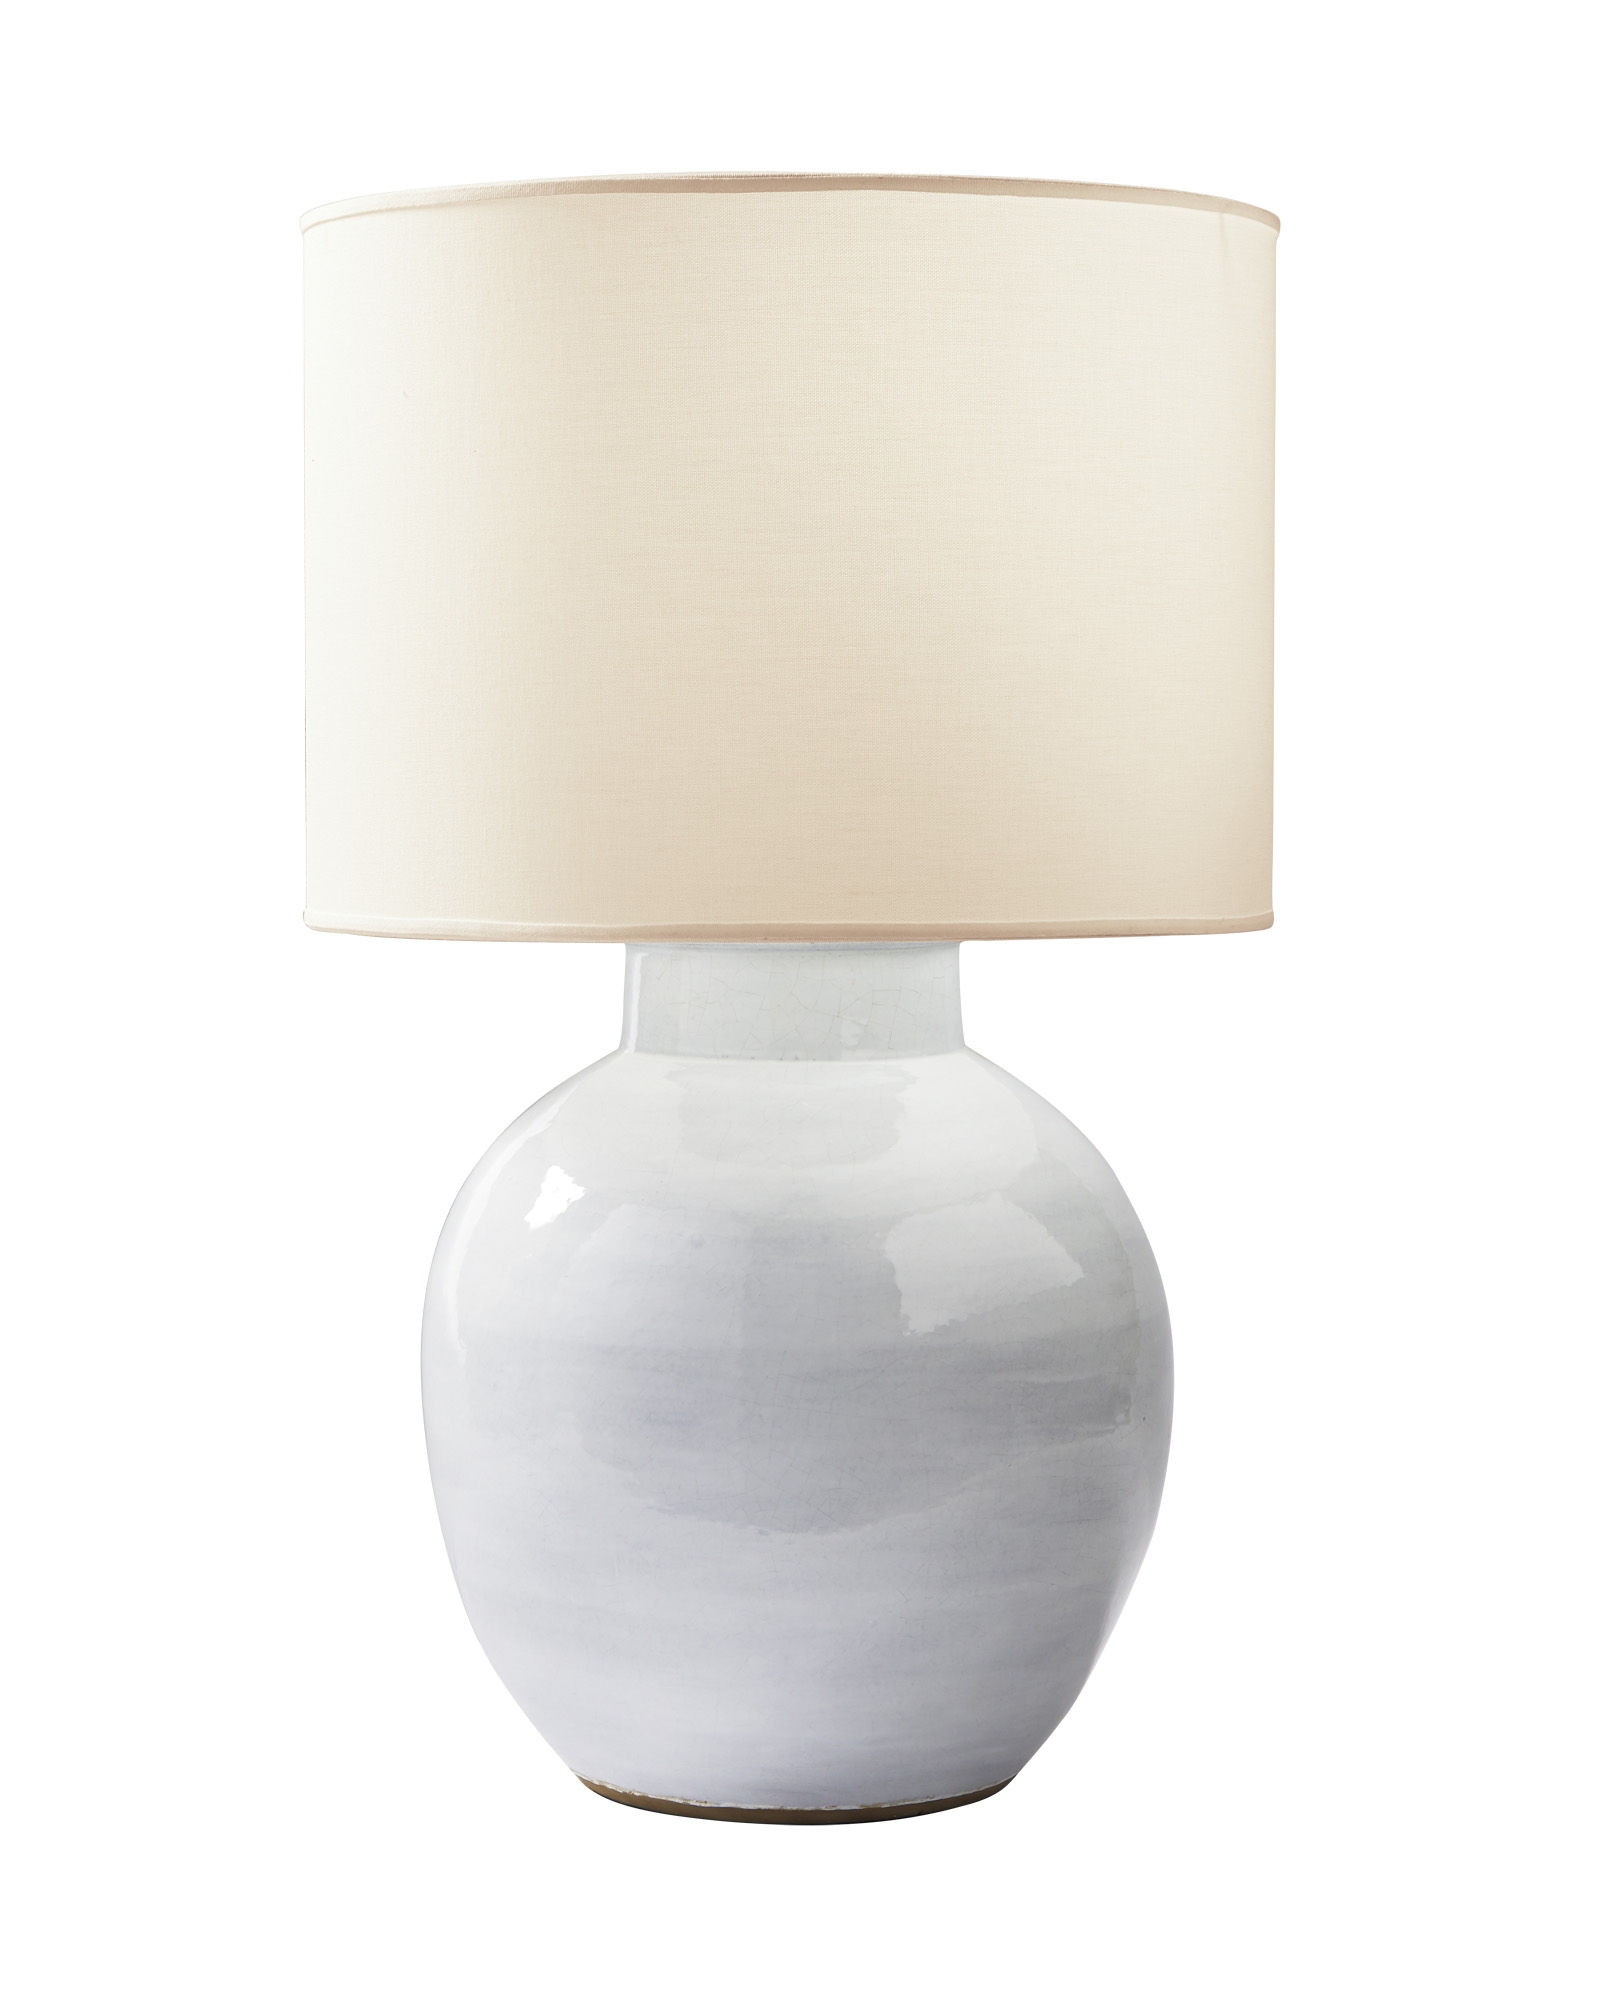 Morris Table Lamp - White - Image 1